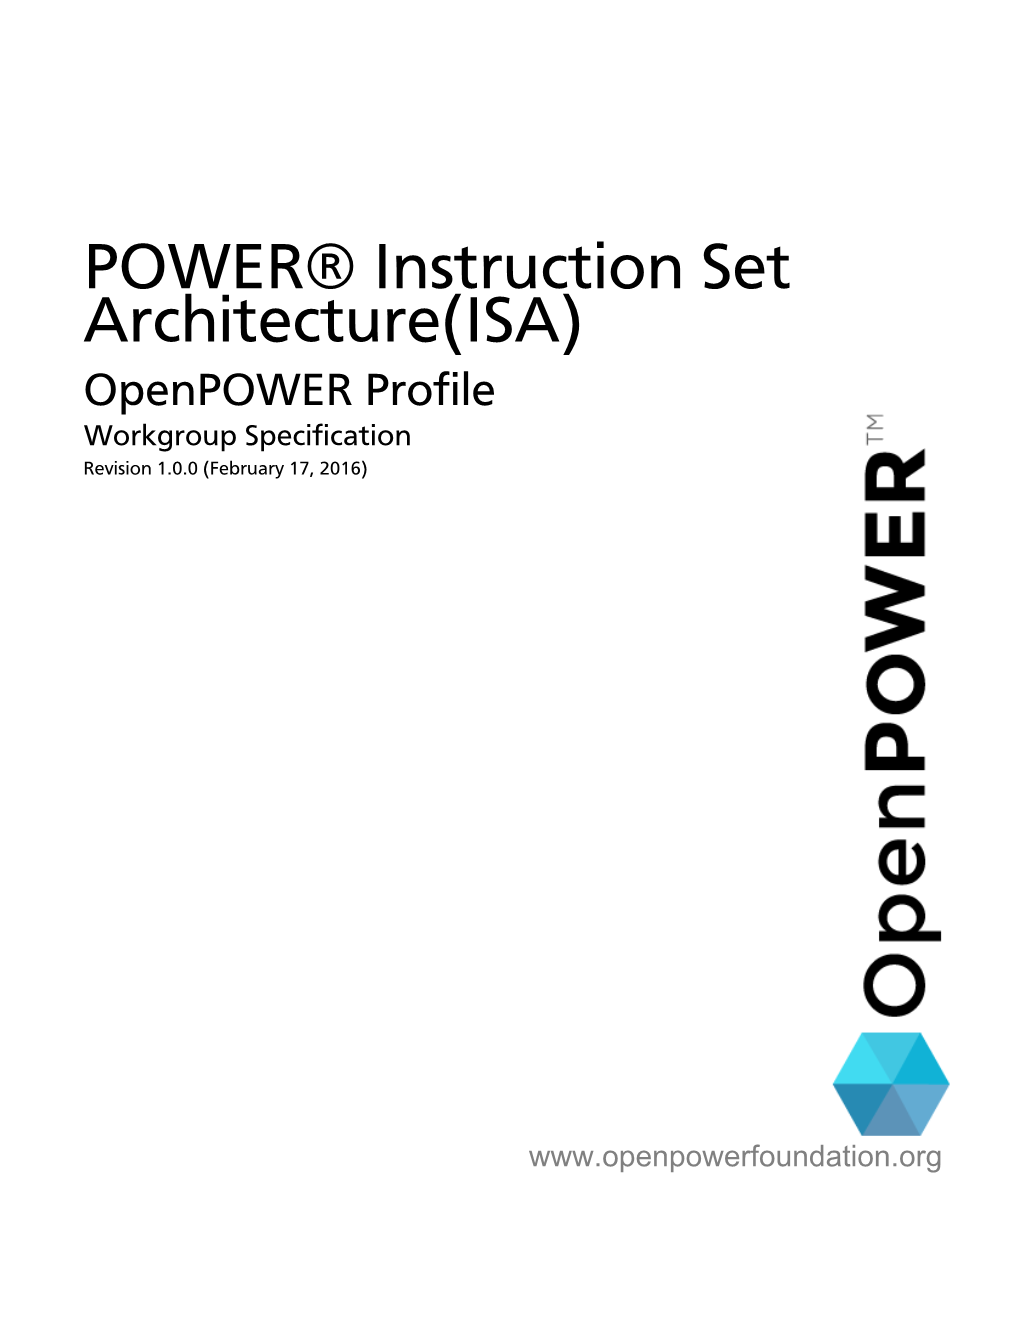 POWER® Instruction Set Architecture(ISA): Openpower Profile Revision 1.0.0 (2016-02-17) Copyright © 2016 Openpower Foundation